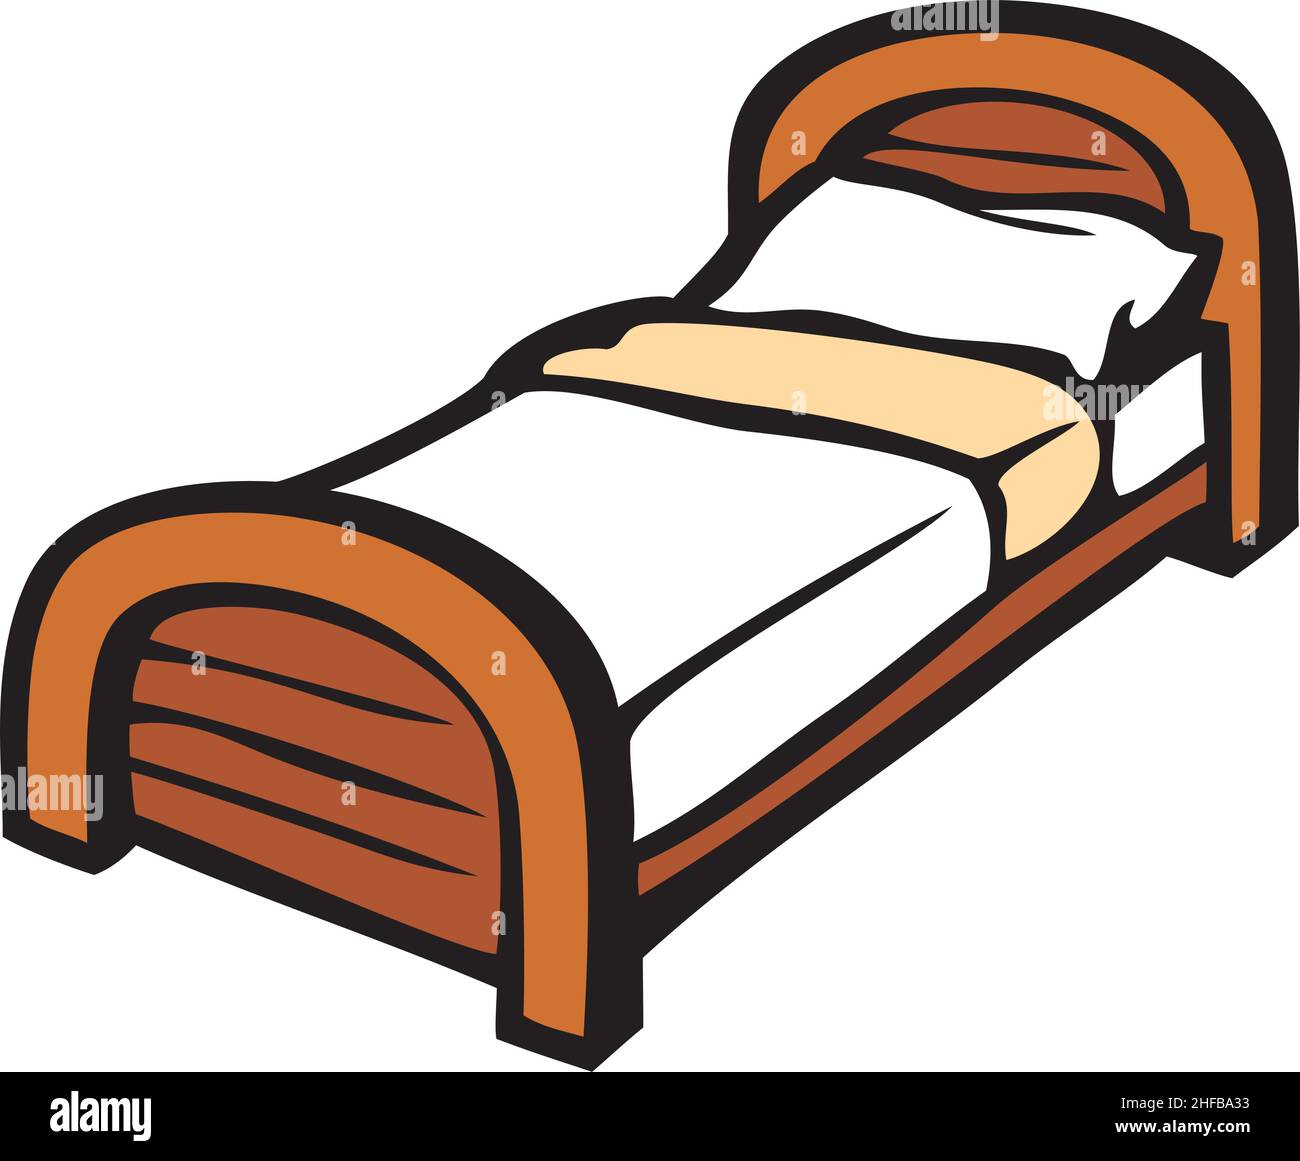 Vektorgrafik Bett und Kissen Stock Vektor